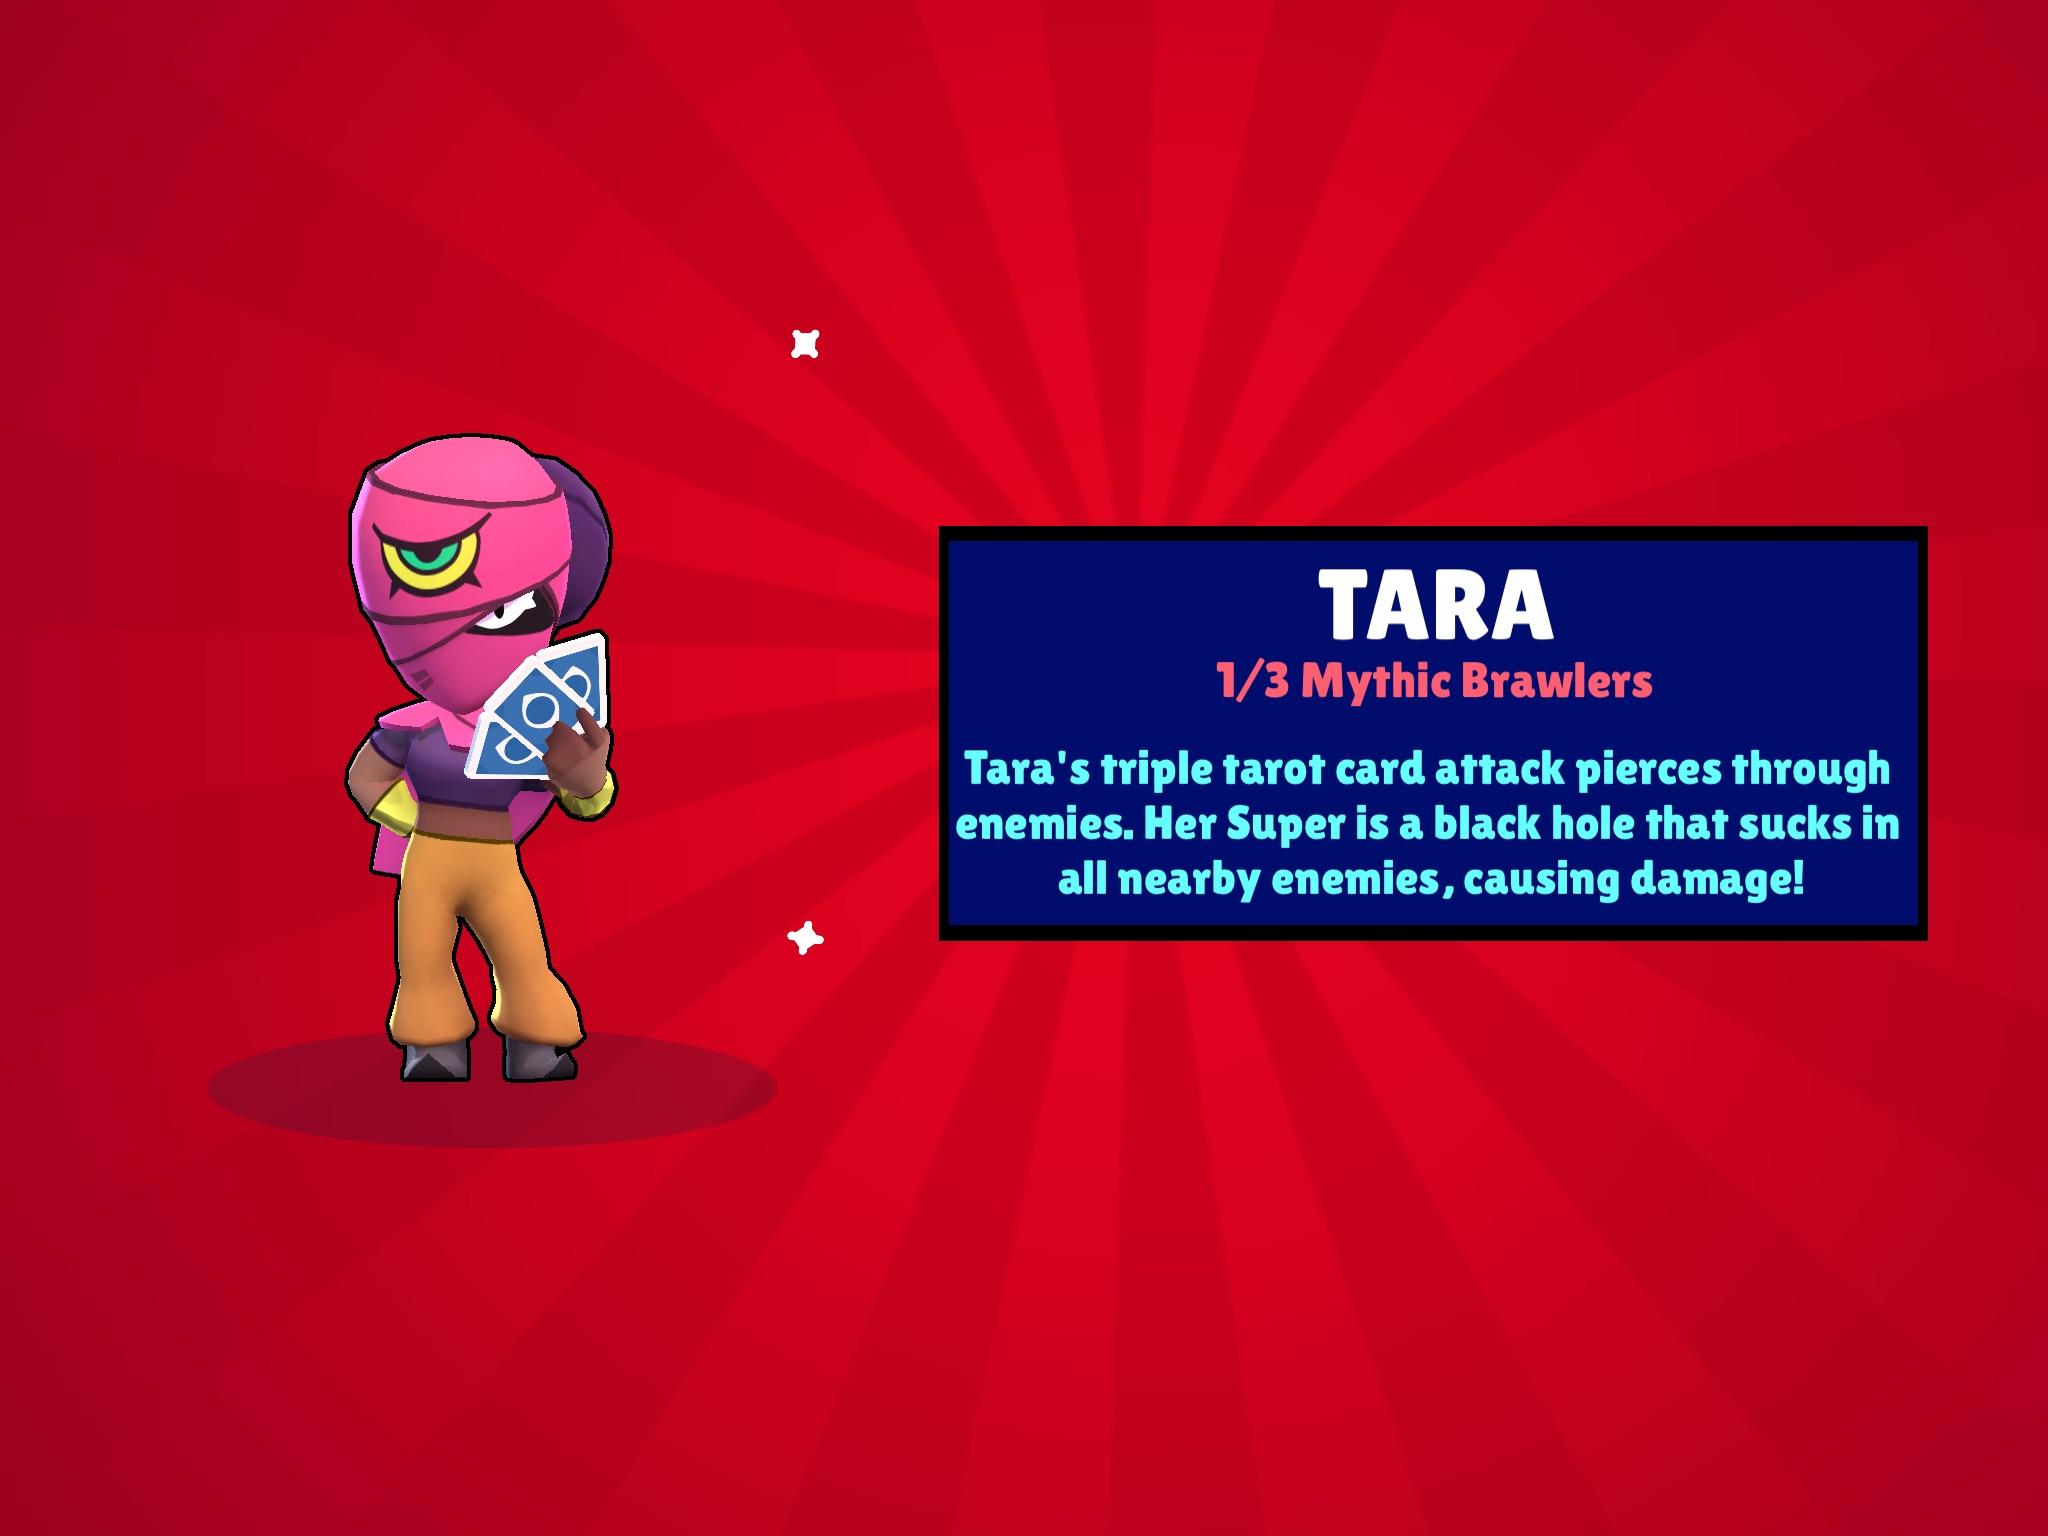 Just got Tara from a normal box